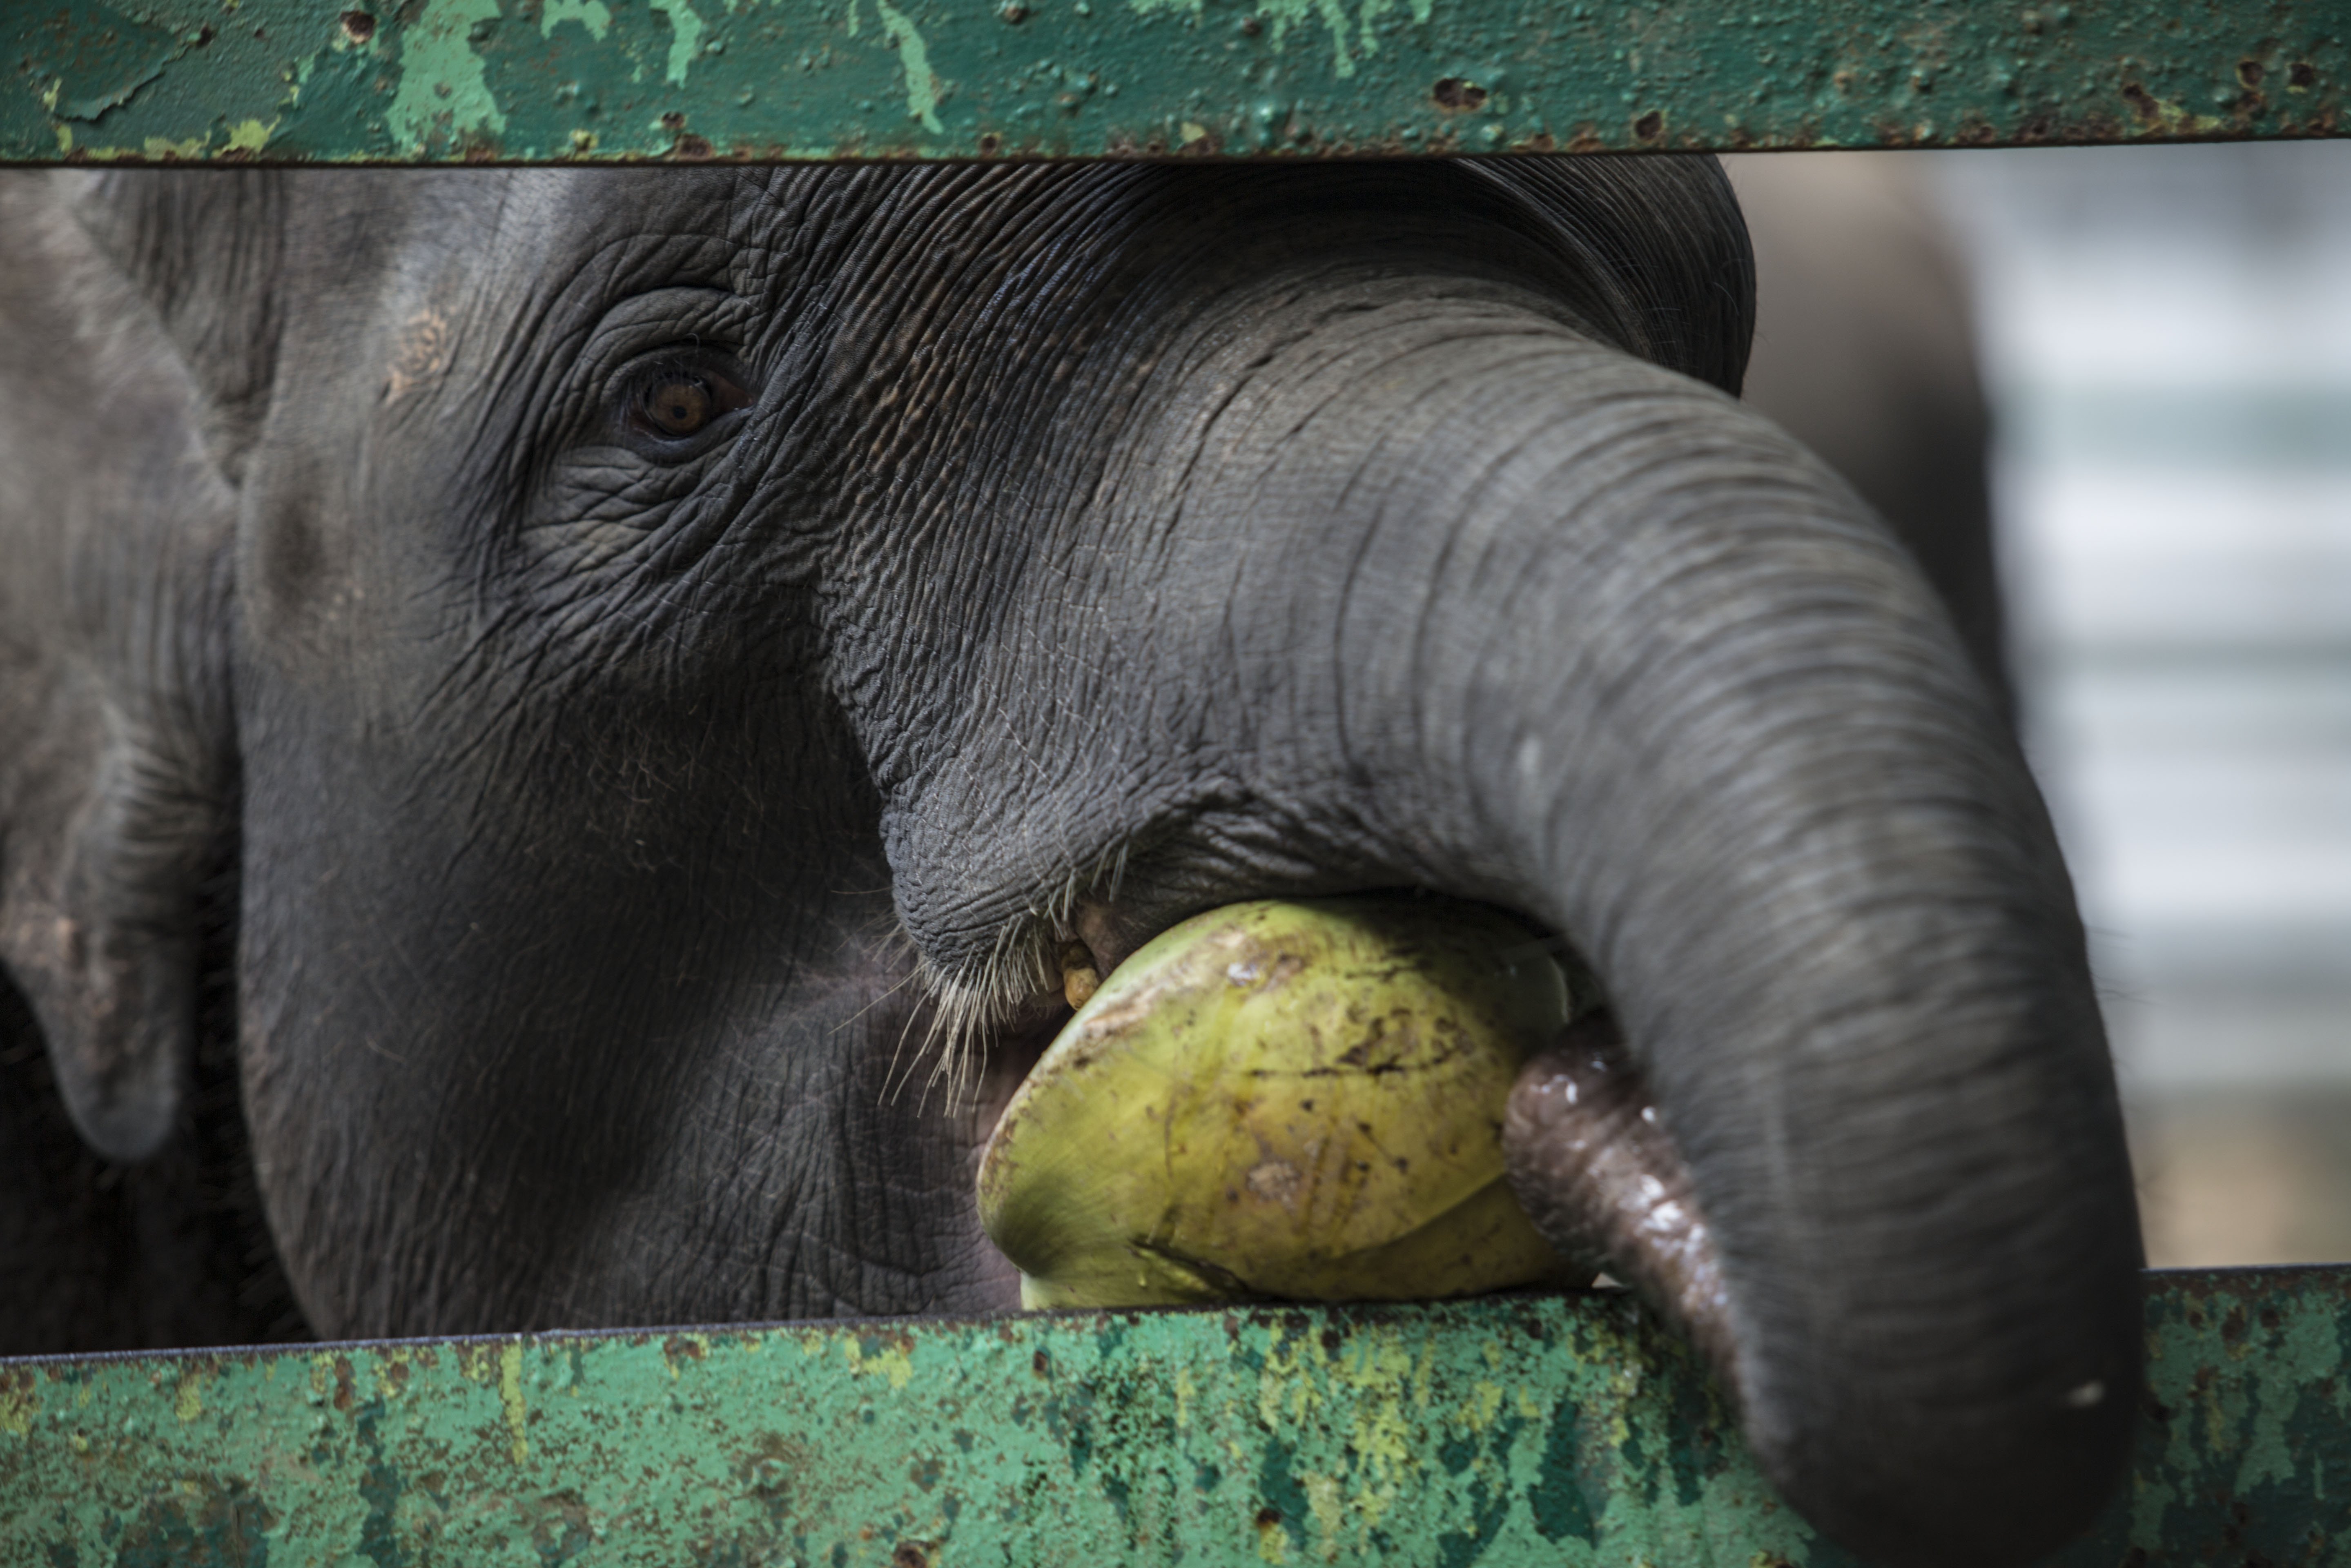 Petugas memberi makan gajah di Taman Margasatwa Ragunan, Jakarta Selatan (22/4/2020). Satwa-satwa di Taman Margasatwa Ragunan terlihat lebih tenang dan fresh sejak penutupan lokasi mulai 14 Maret untuk mencegah penyebaran virus corona COVID-19.